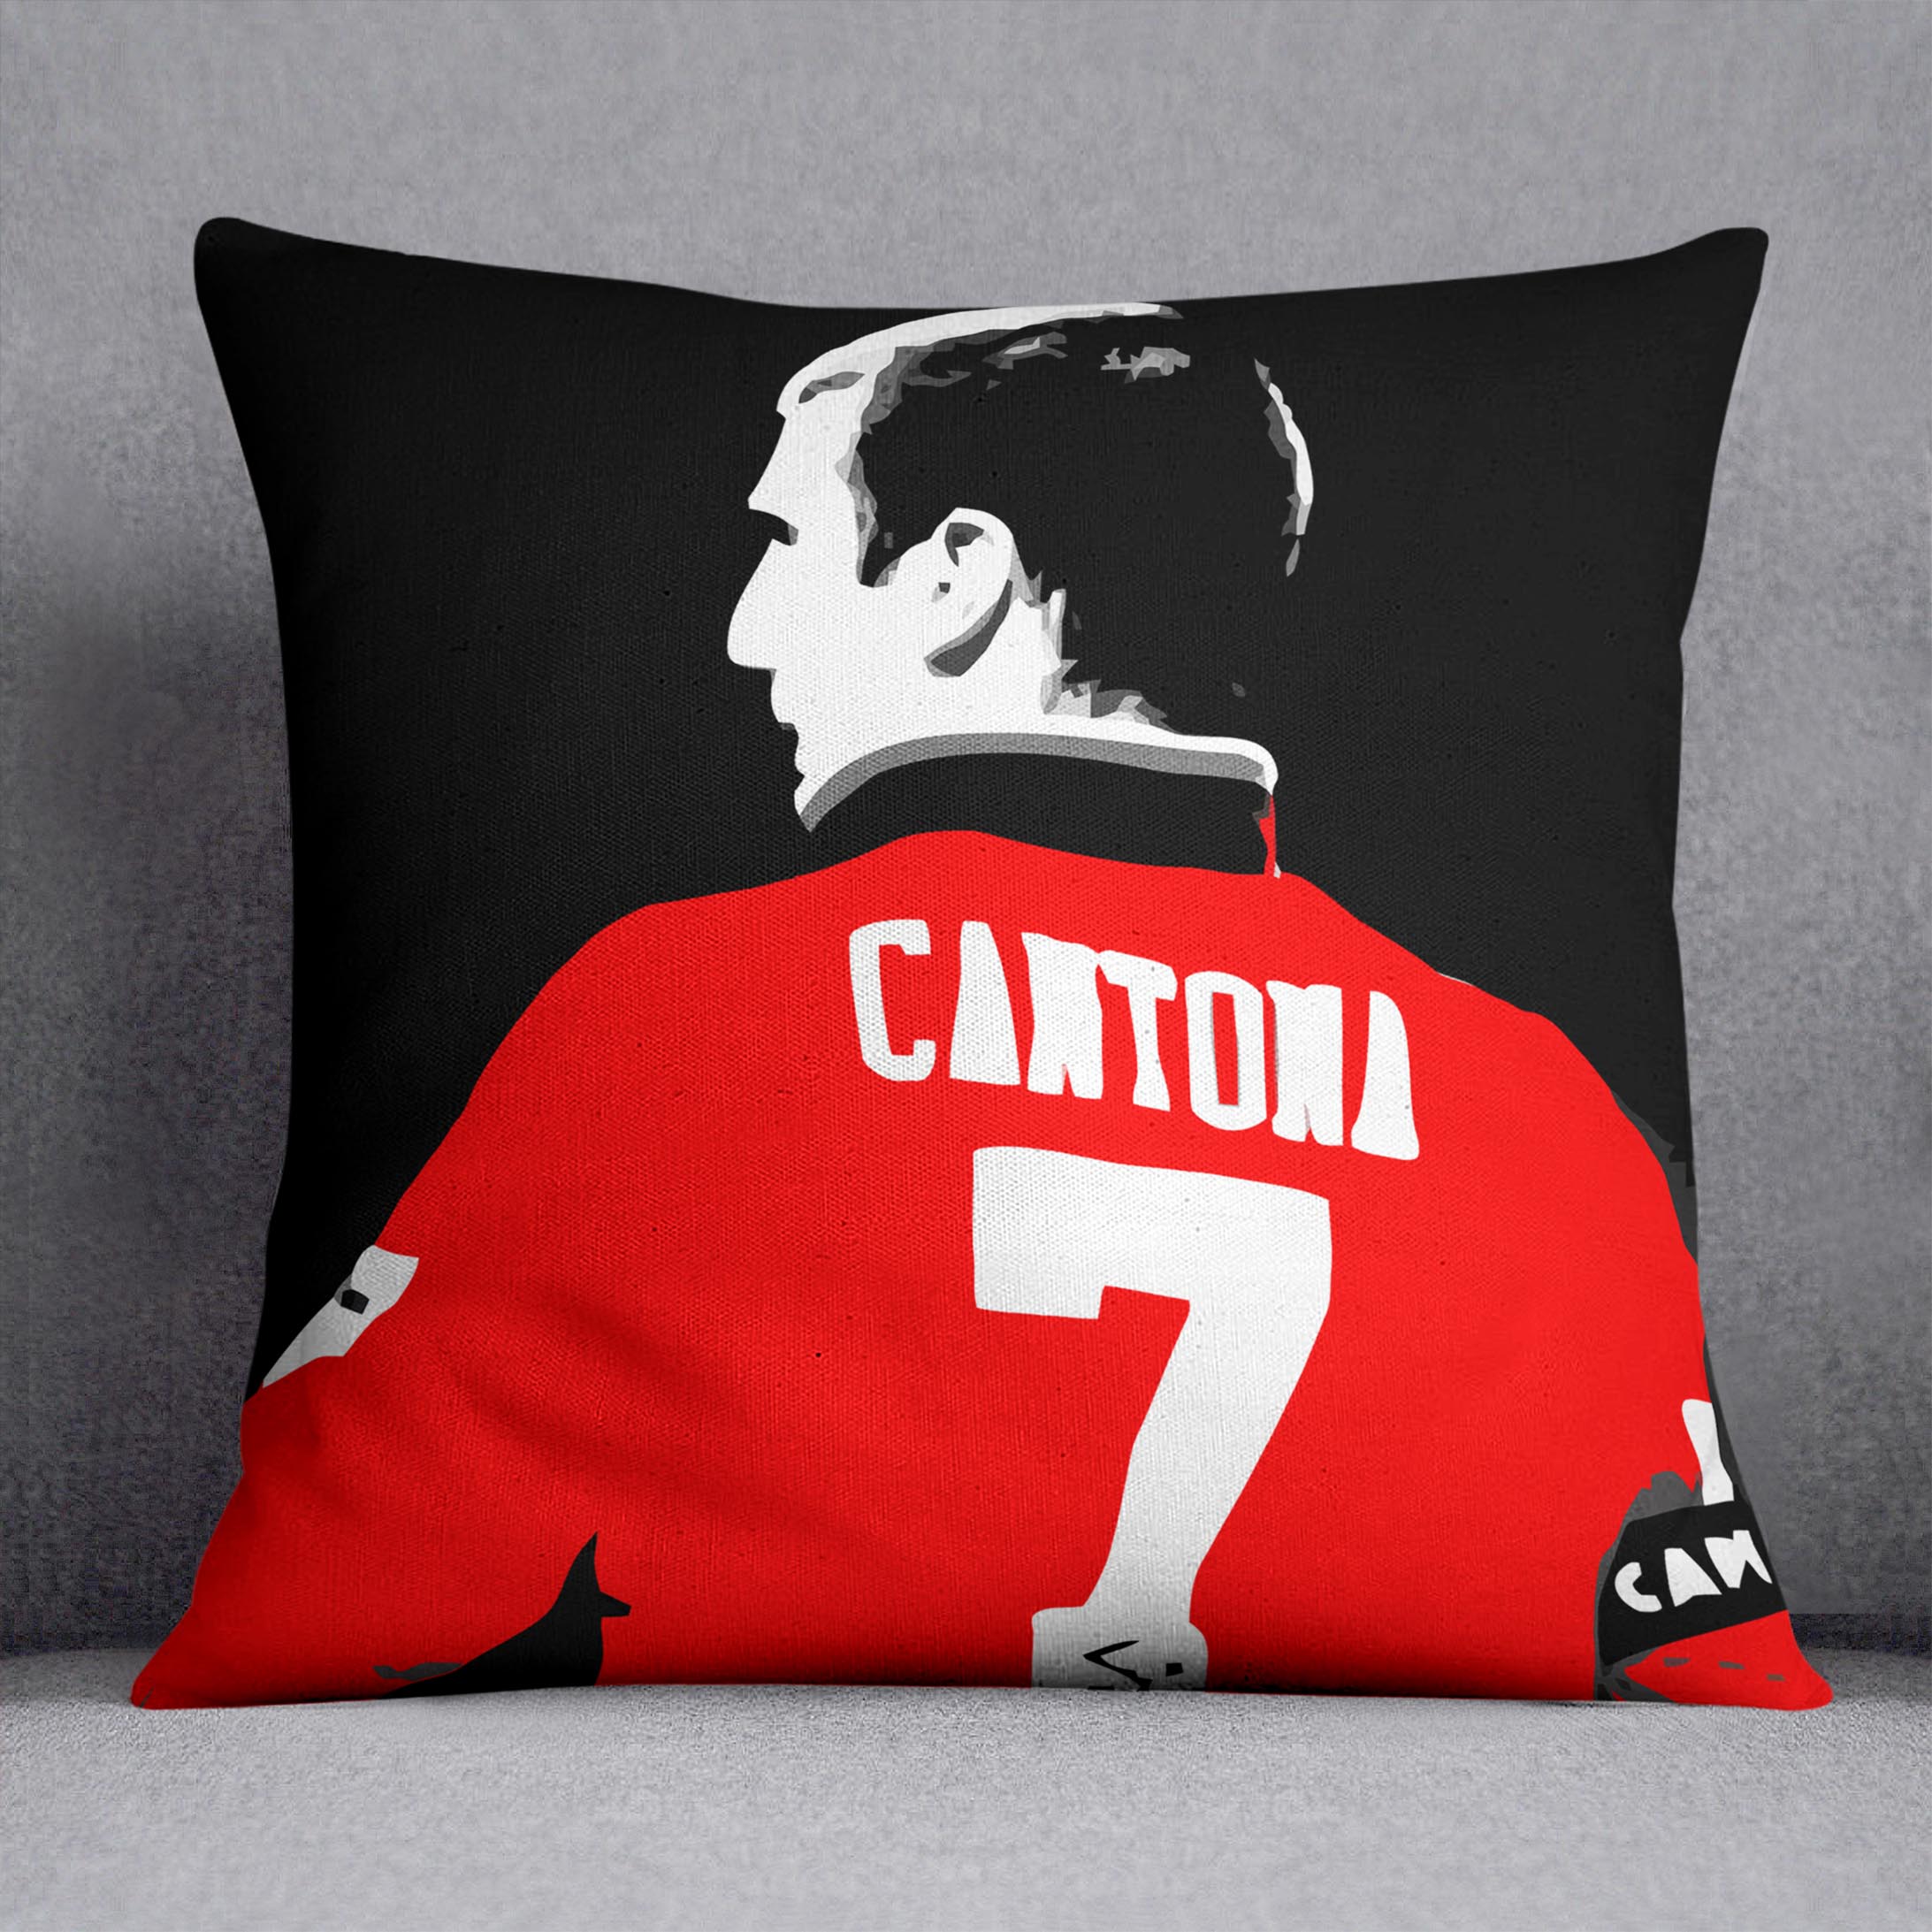 Eric Cantona No 7 Cushion